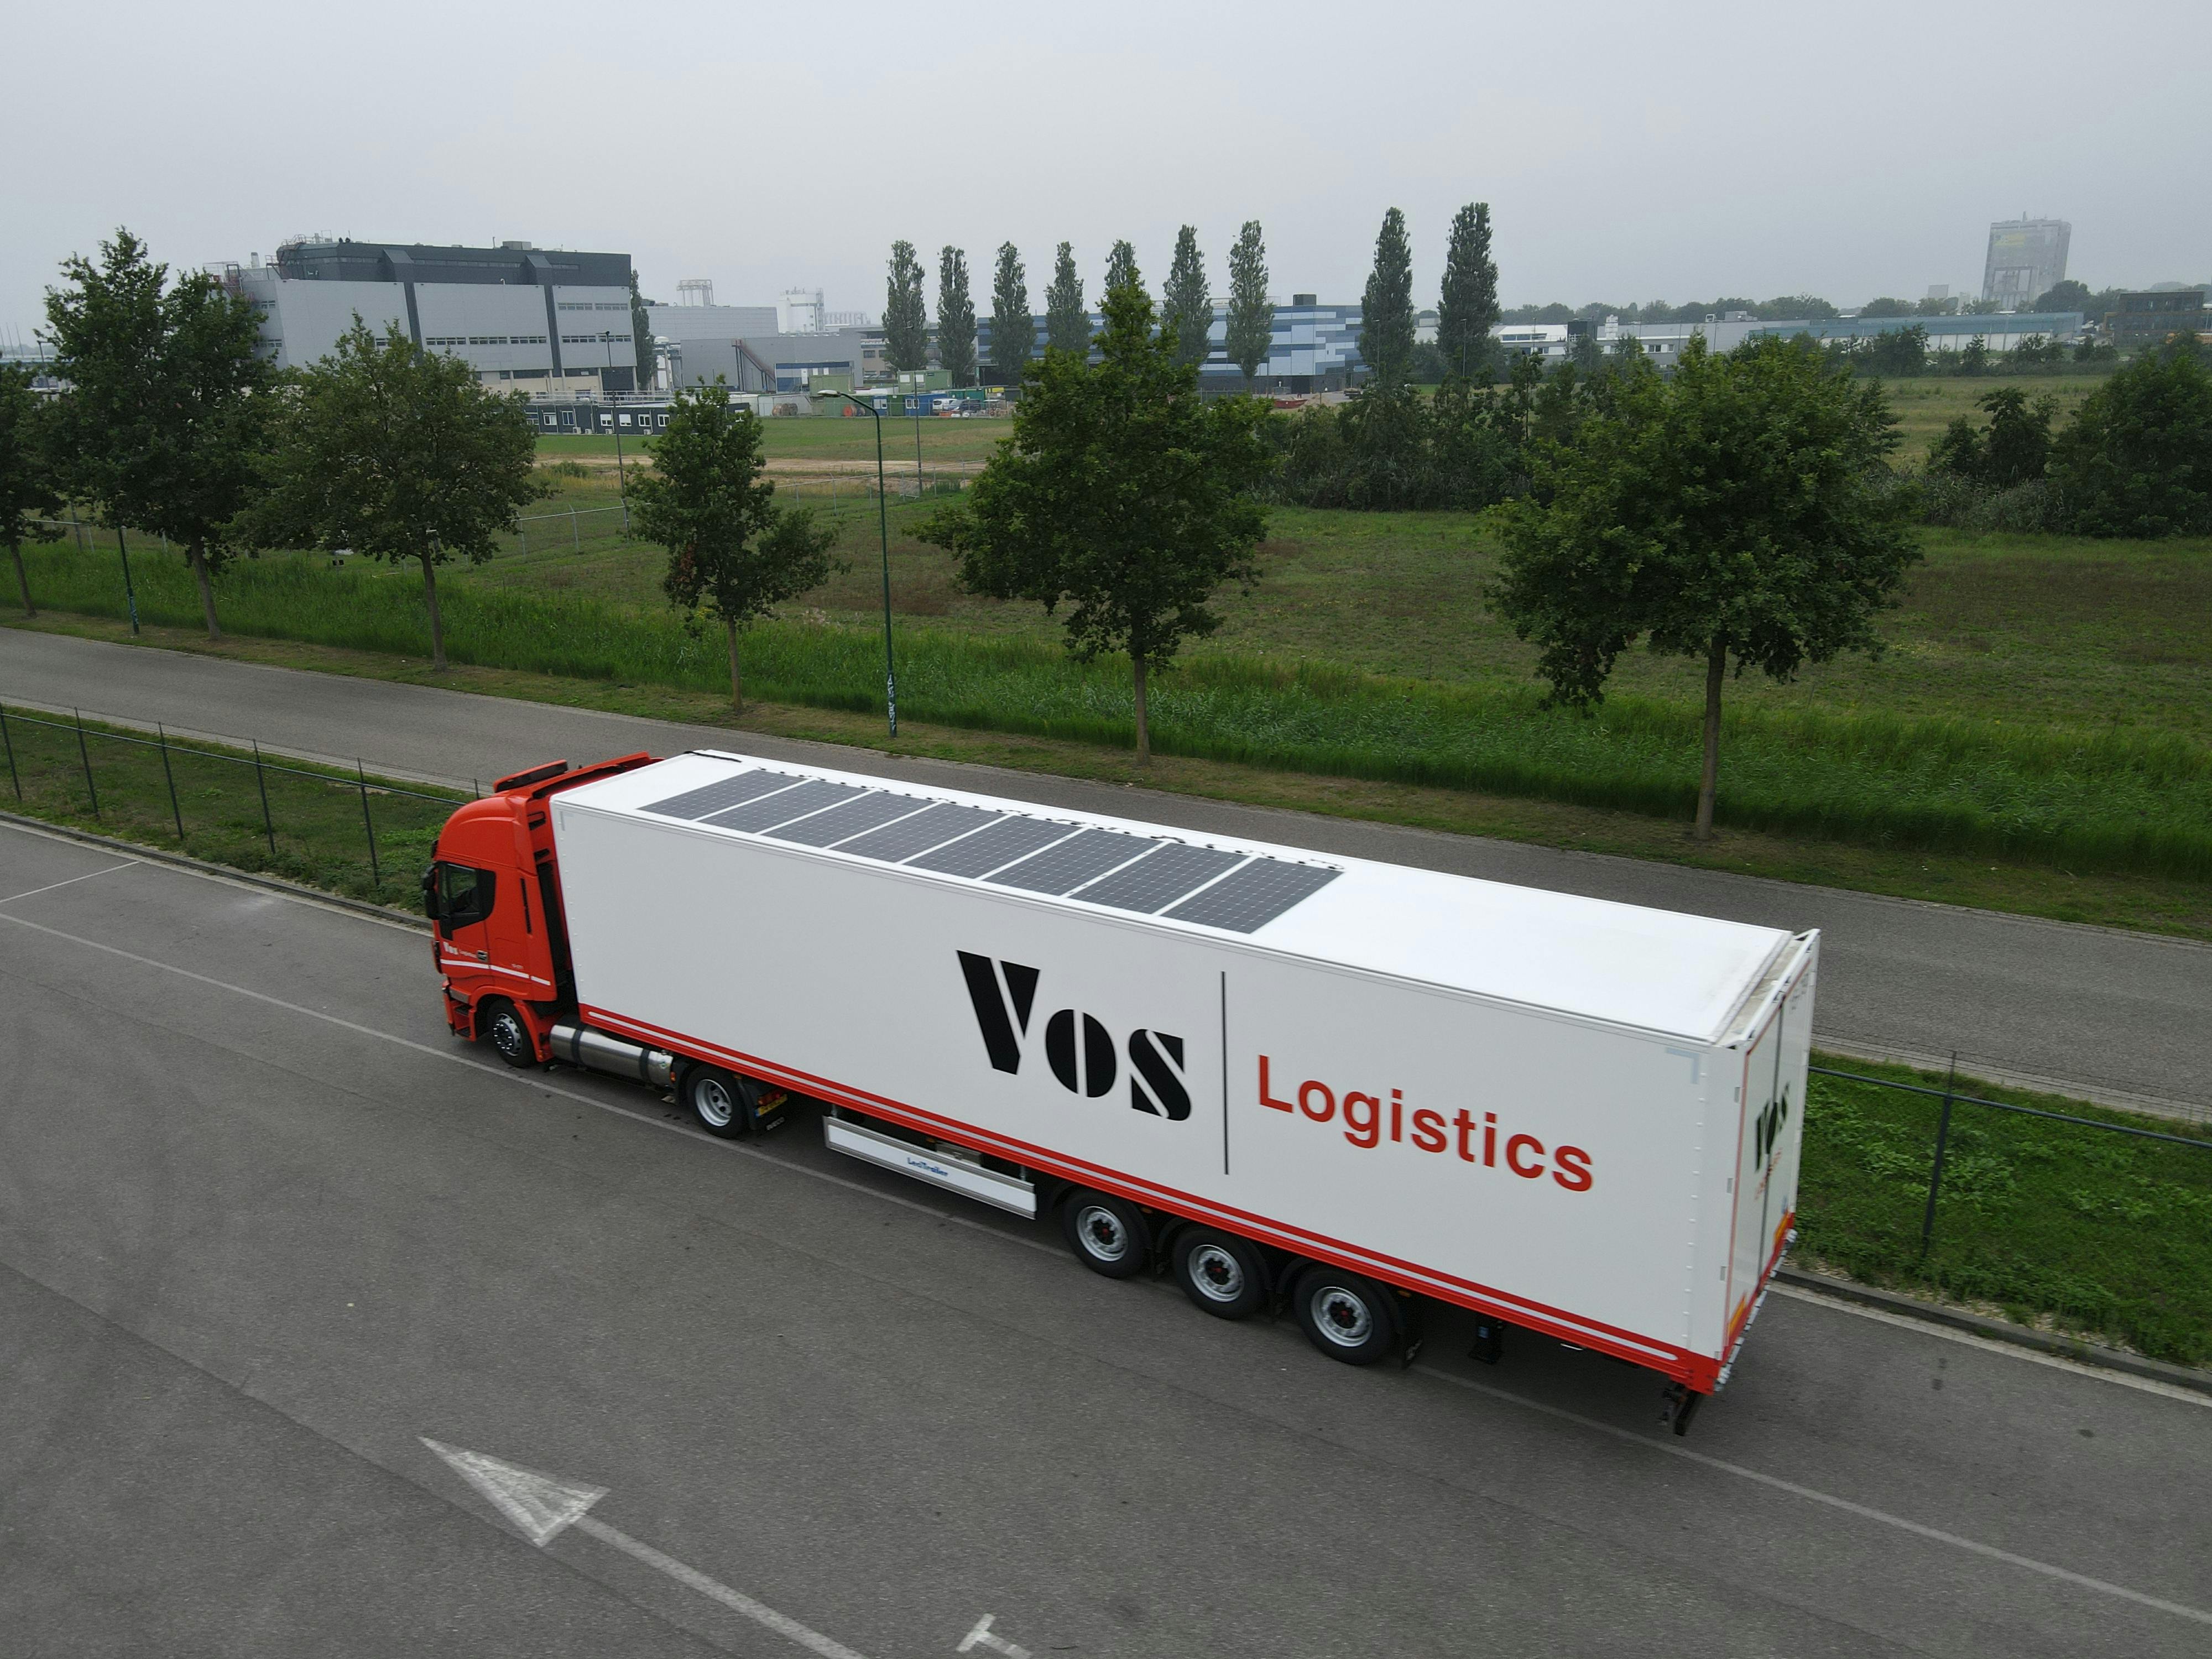 Vos logistics powers its truck with solar panels through SolarOnTop 